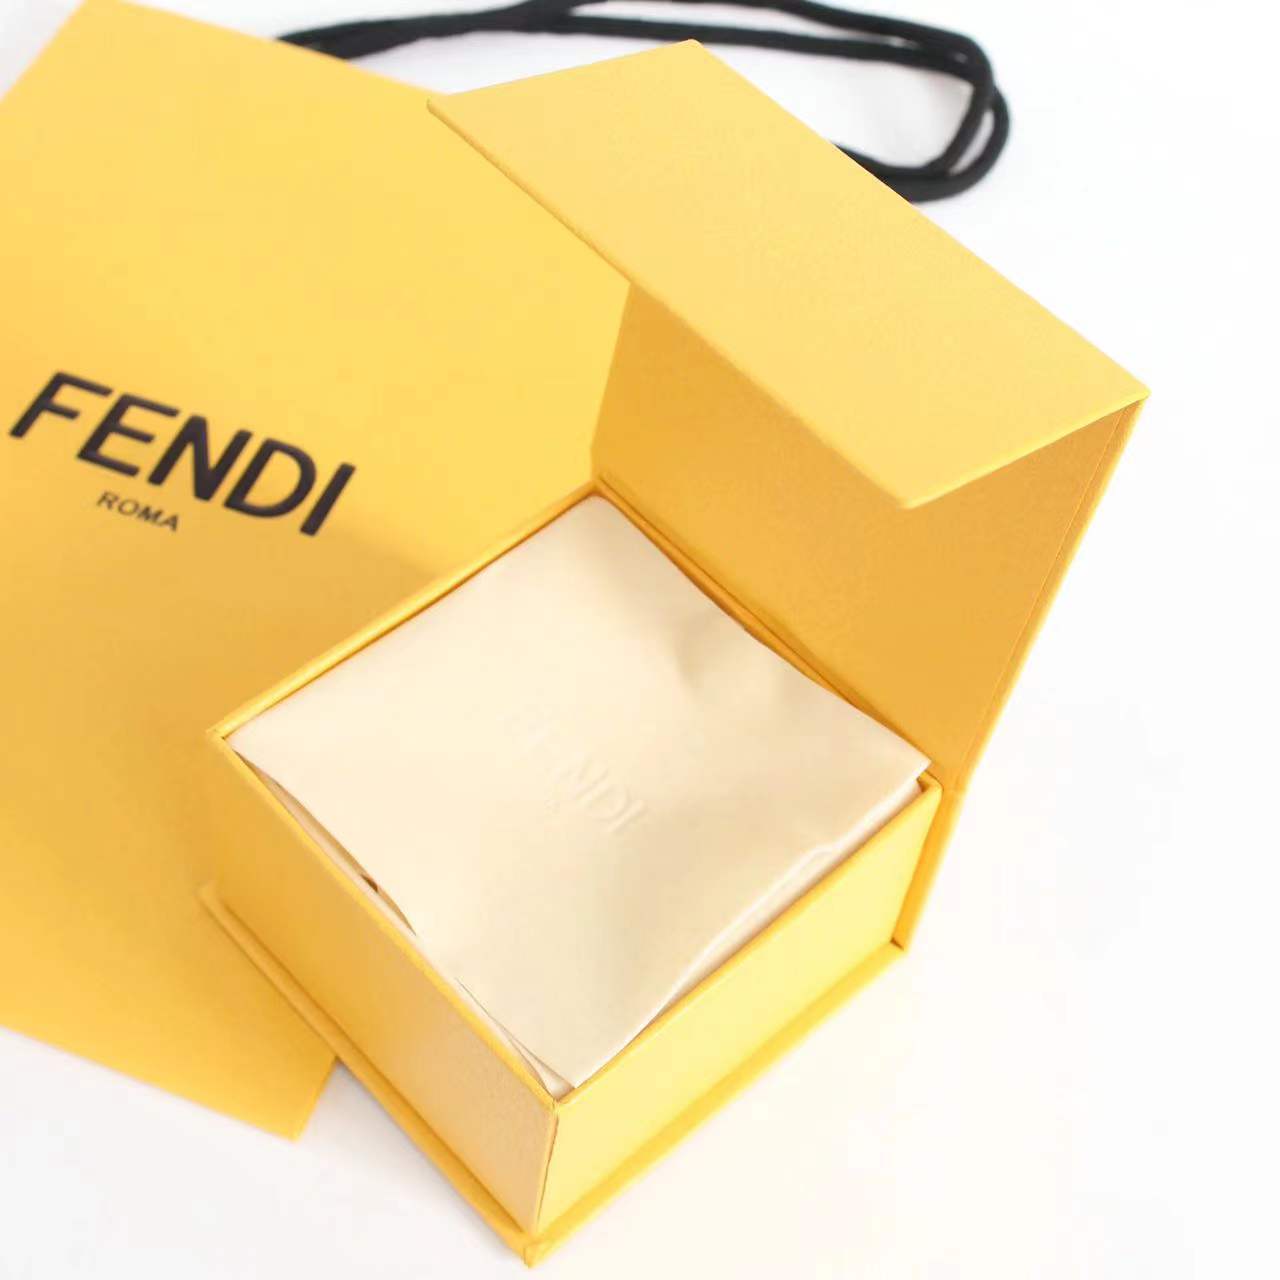 Fendi jewelty box 1 set